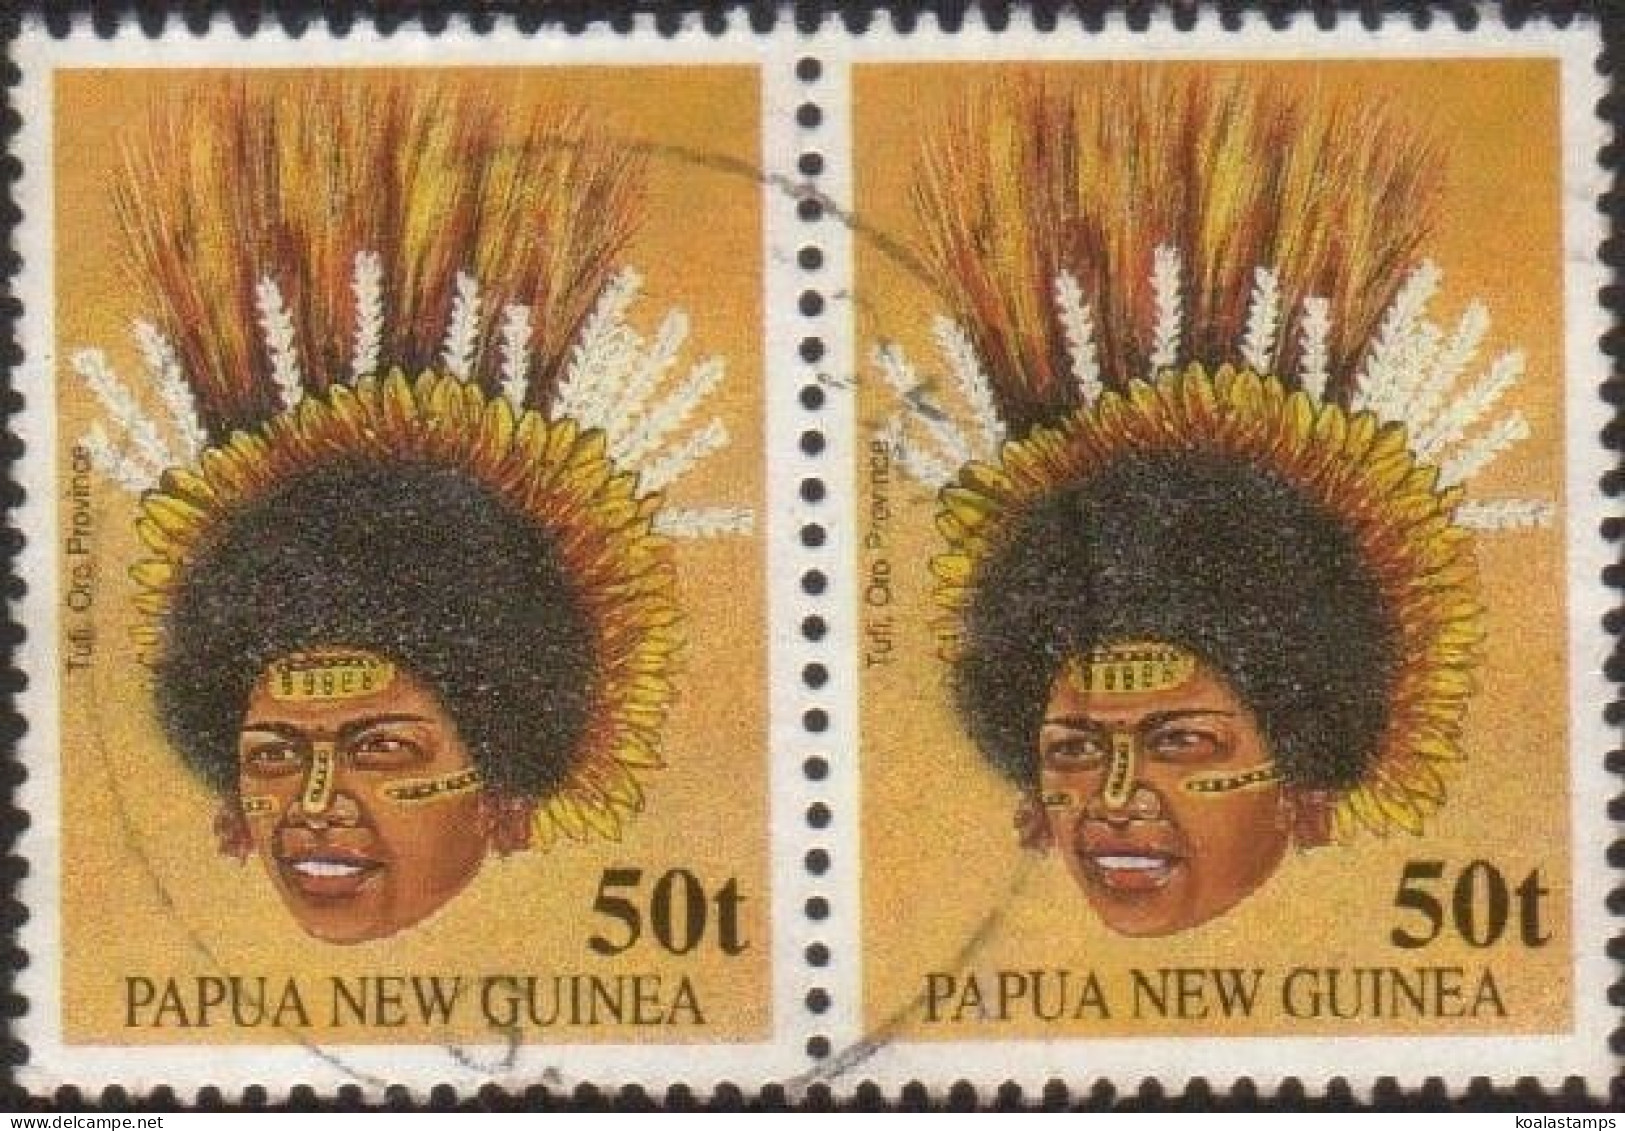 Papua New Guinea 1991 SG660 50t Tribal Head-dress Pair FU - Papua New Guinea